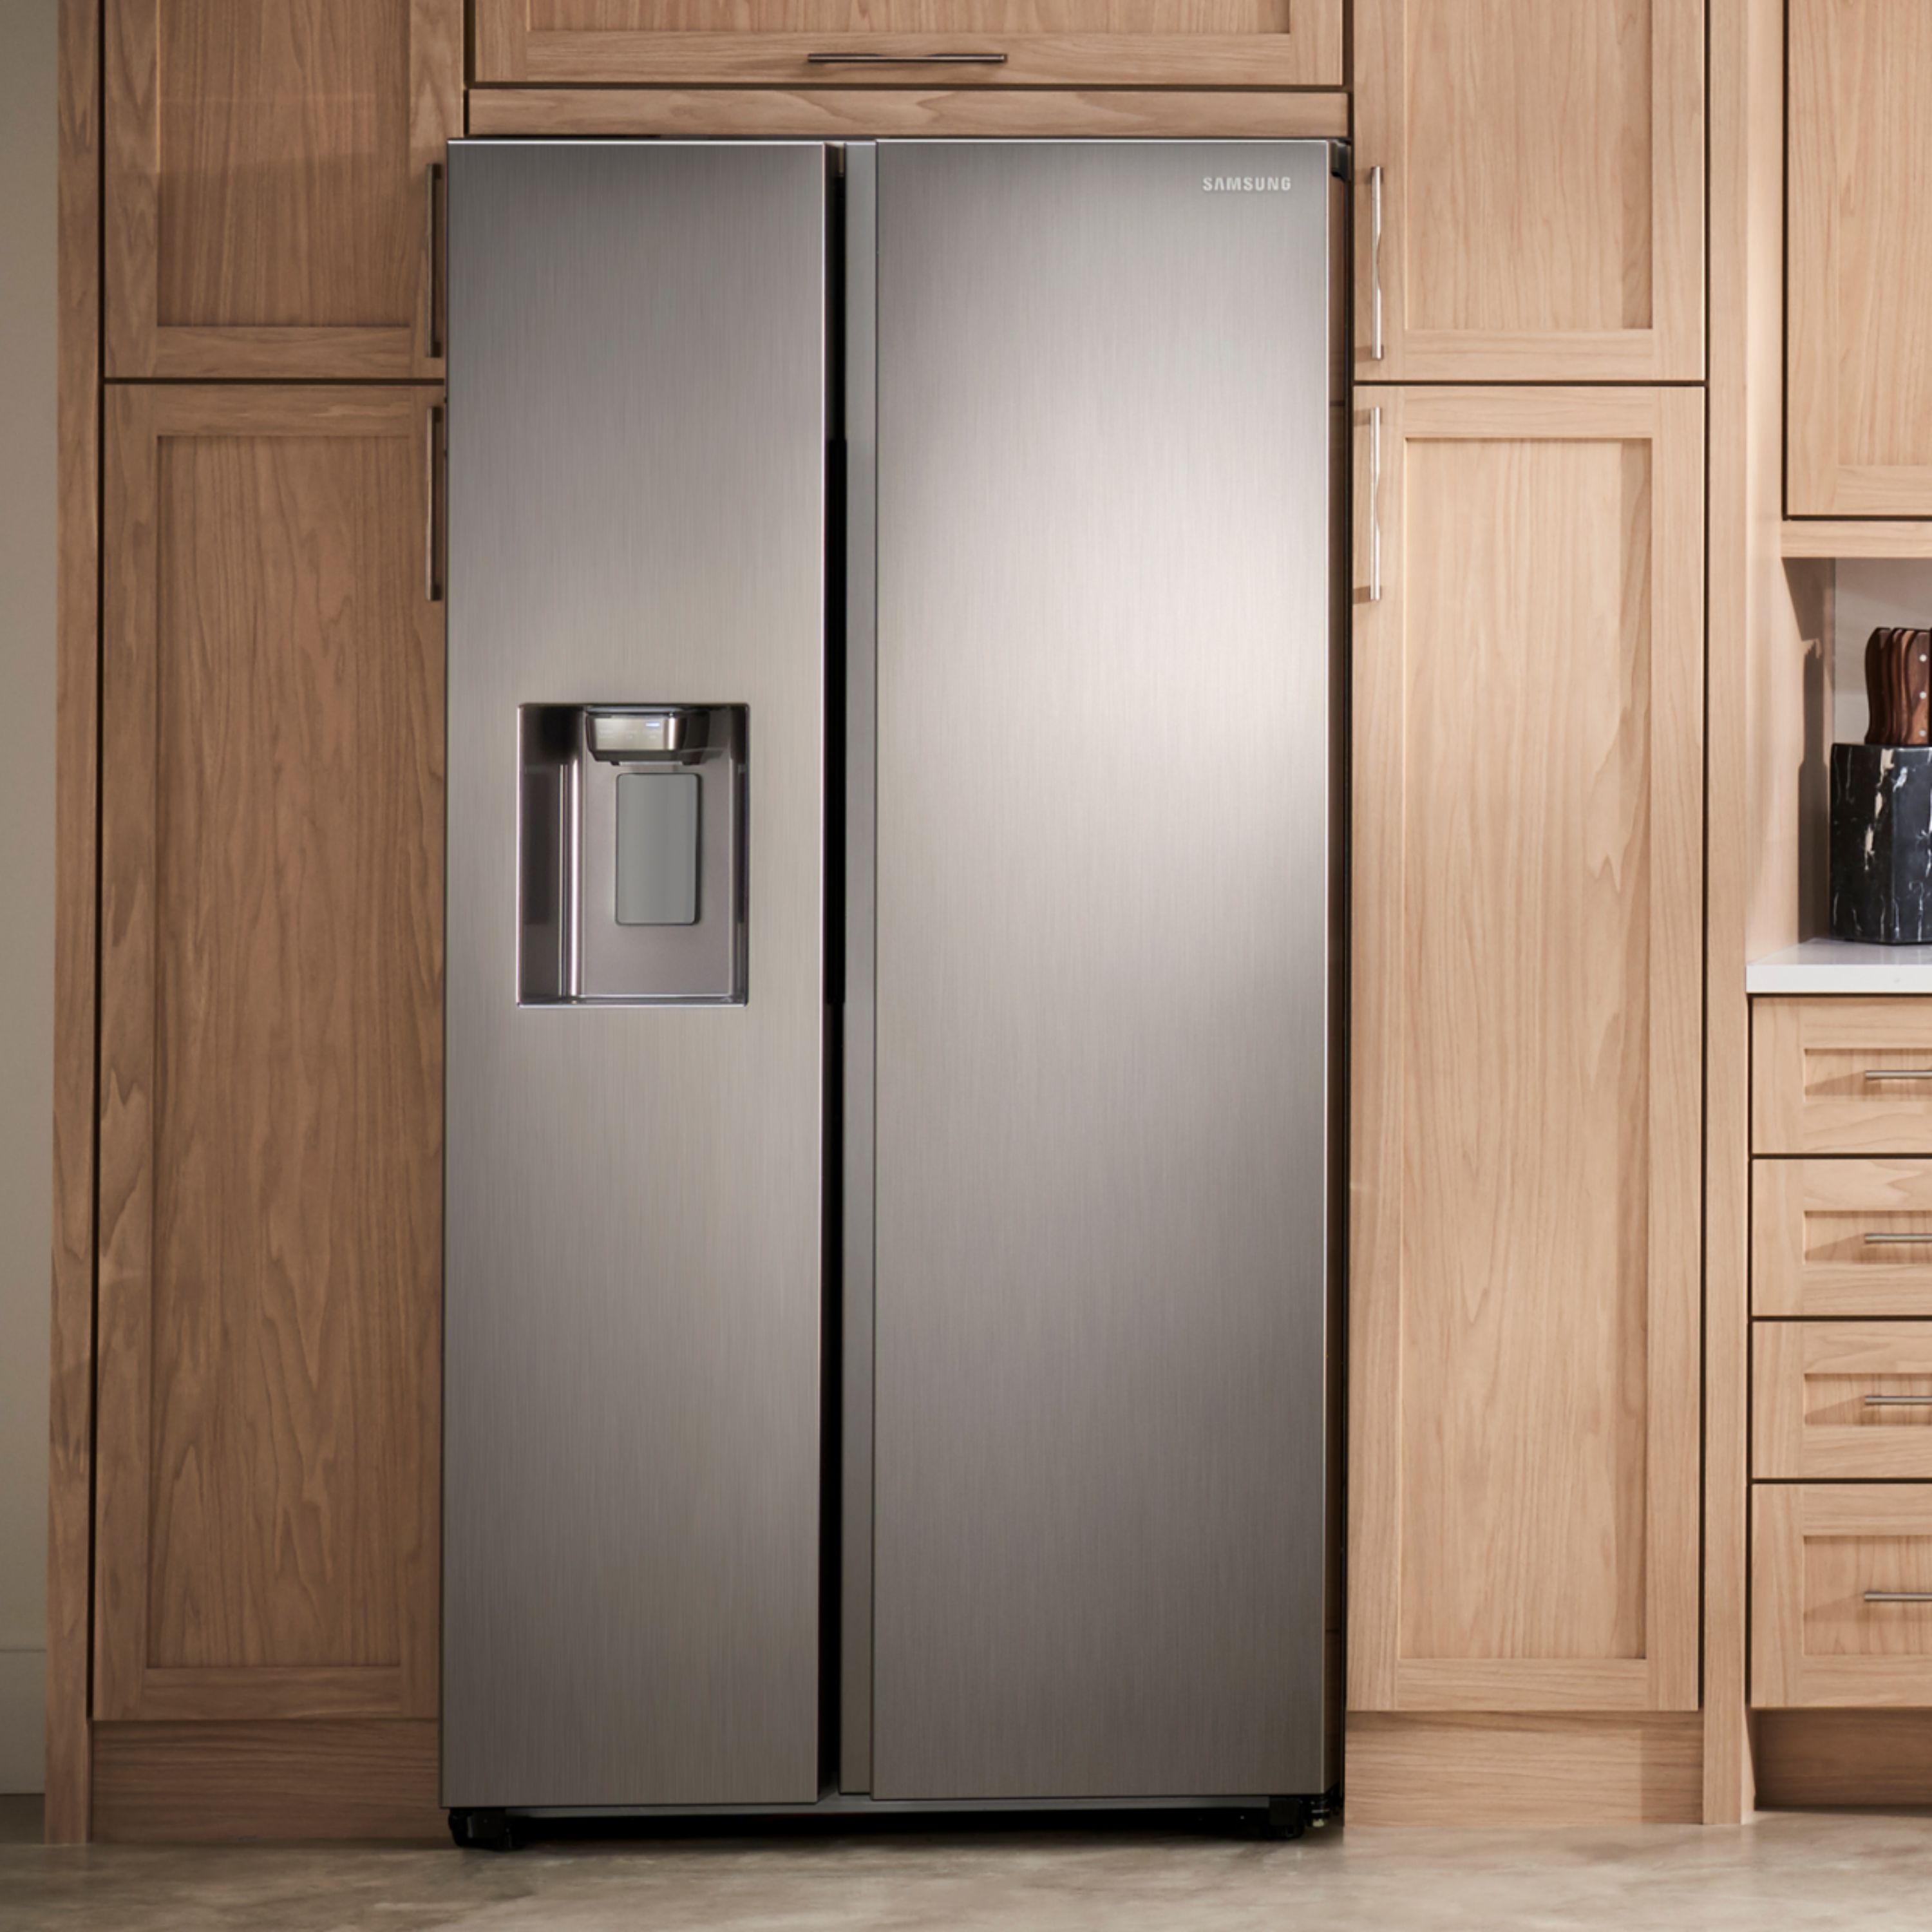 Samsung 22 cu. ft. SidebySide Counter Depth Smart Refrigerator with